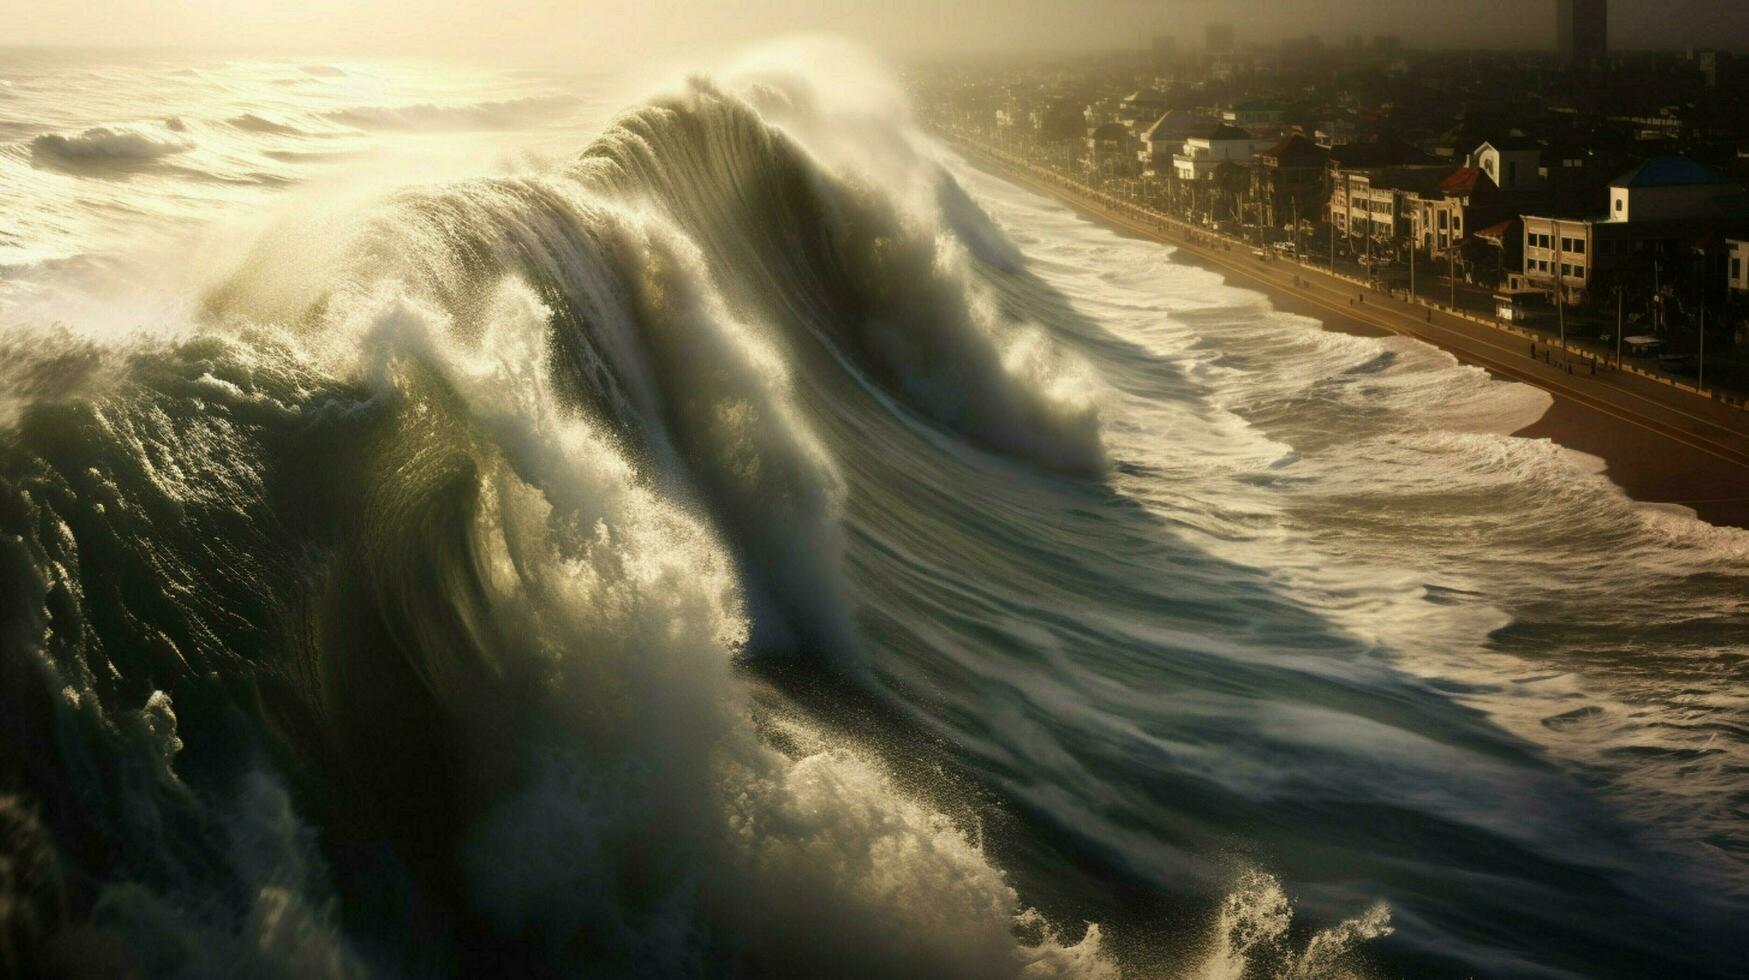 tsunami wave rolls toward shoreline battering the photo